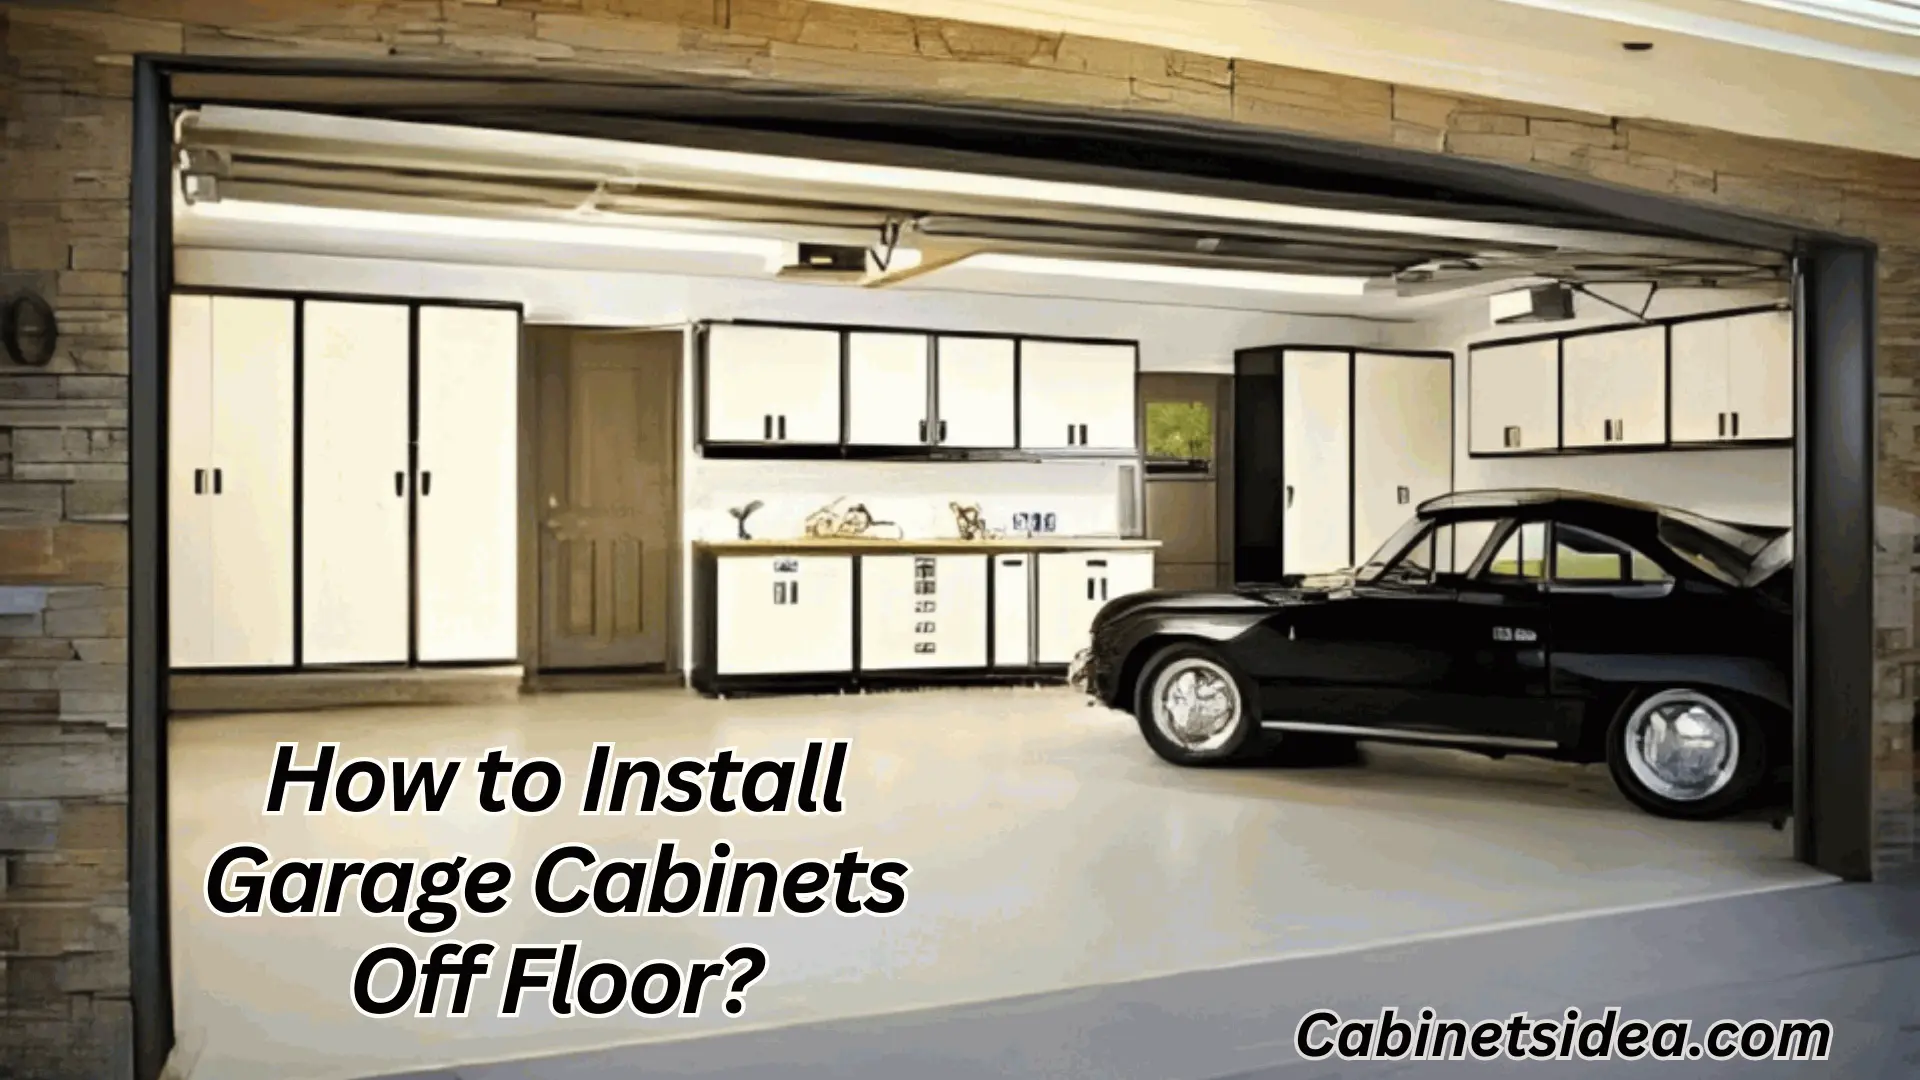 How to Install Garage Cabinets Off Floor? Cabinetsidea.com